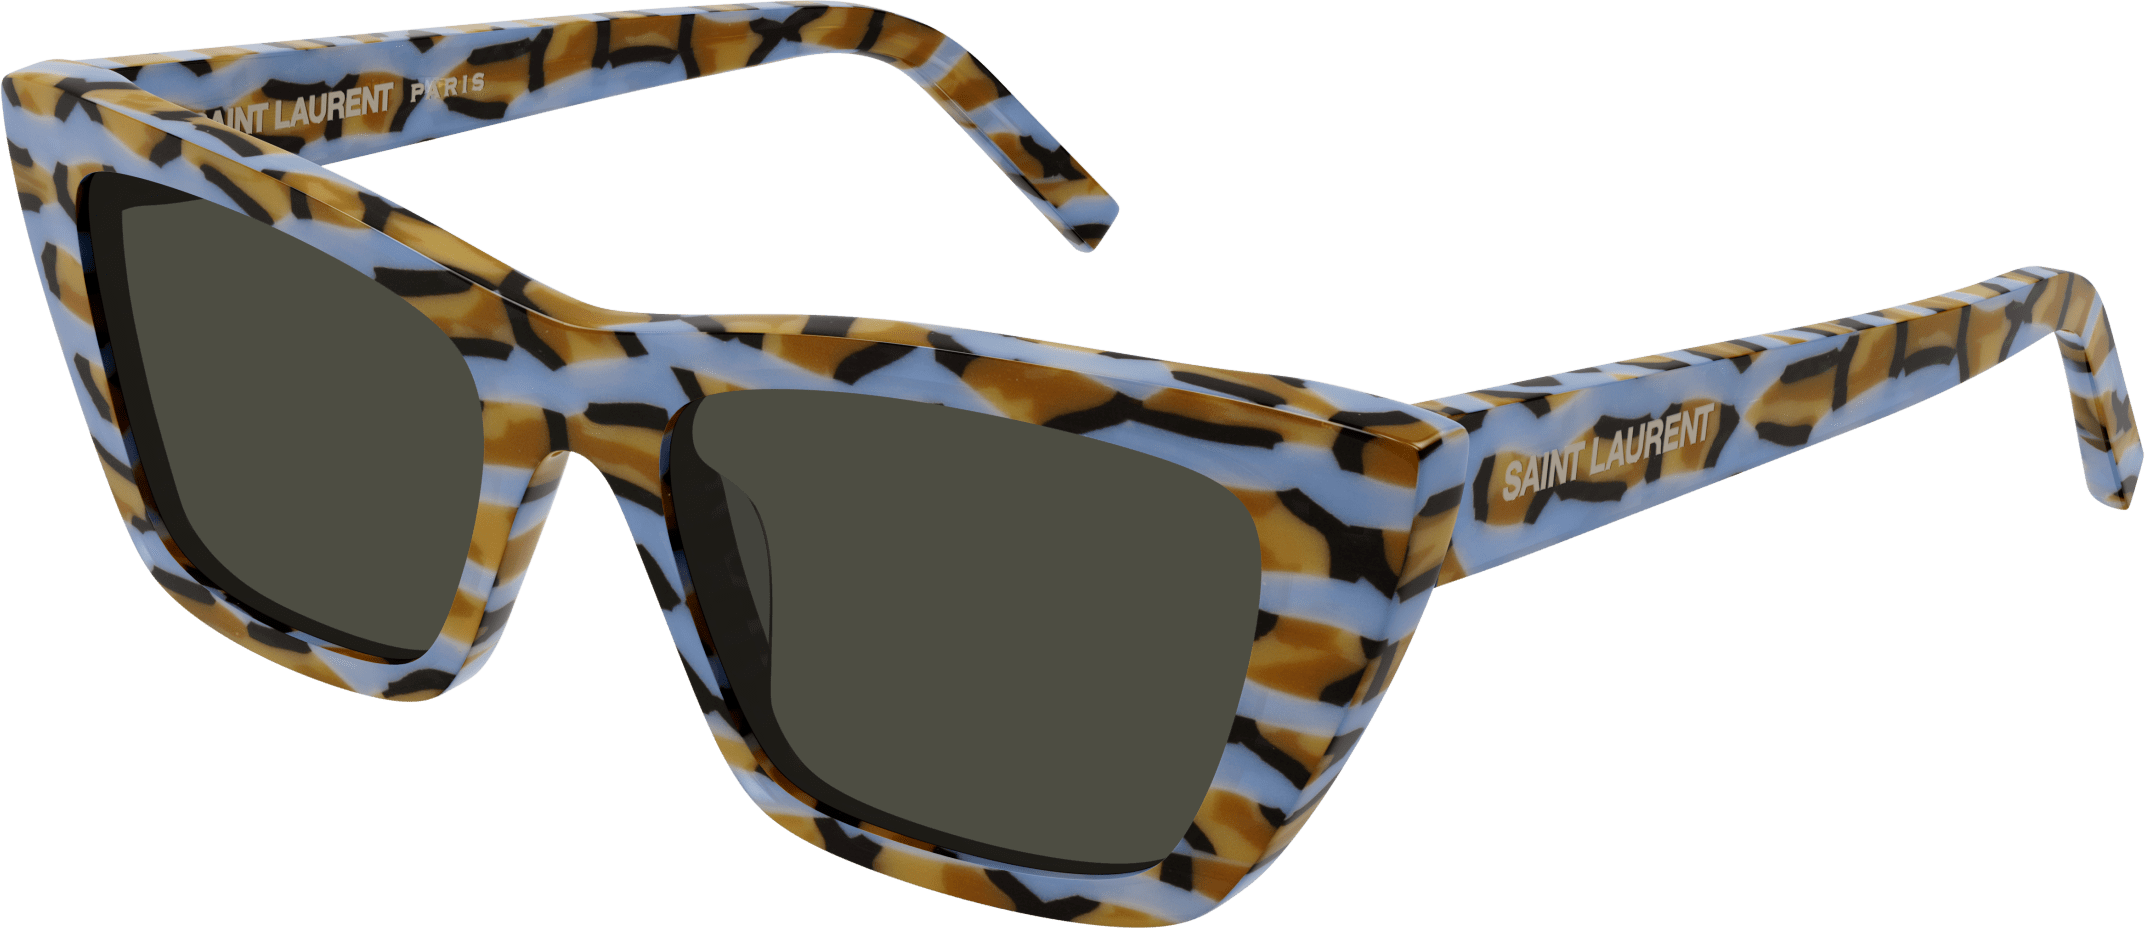 Saint Laurent Eyewear Mica Cat-Eye Sunglasses - Brown